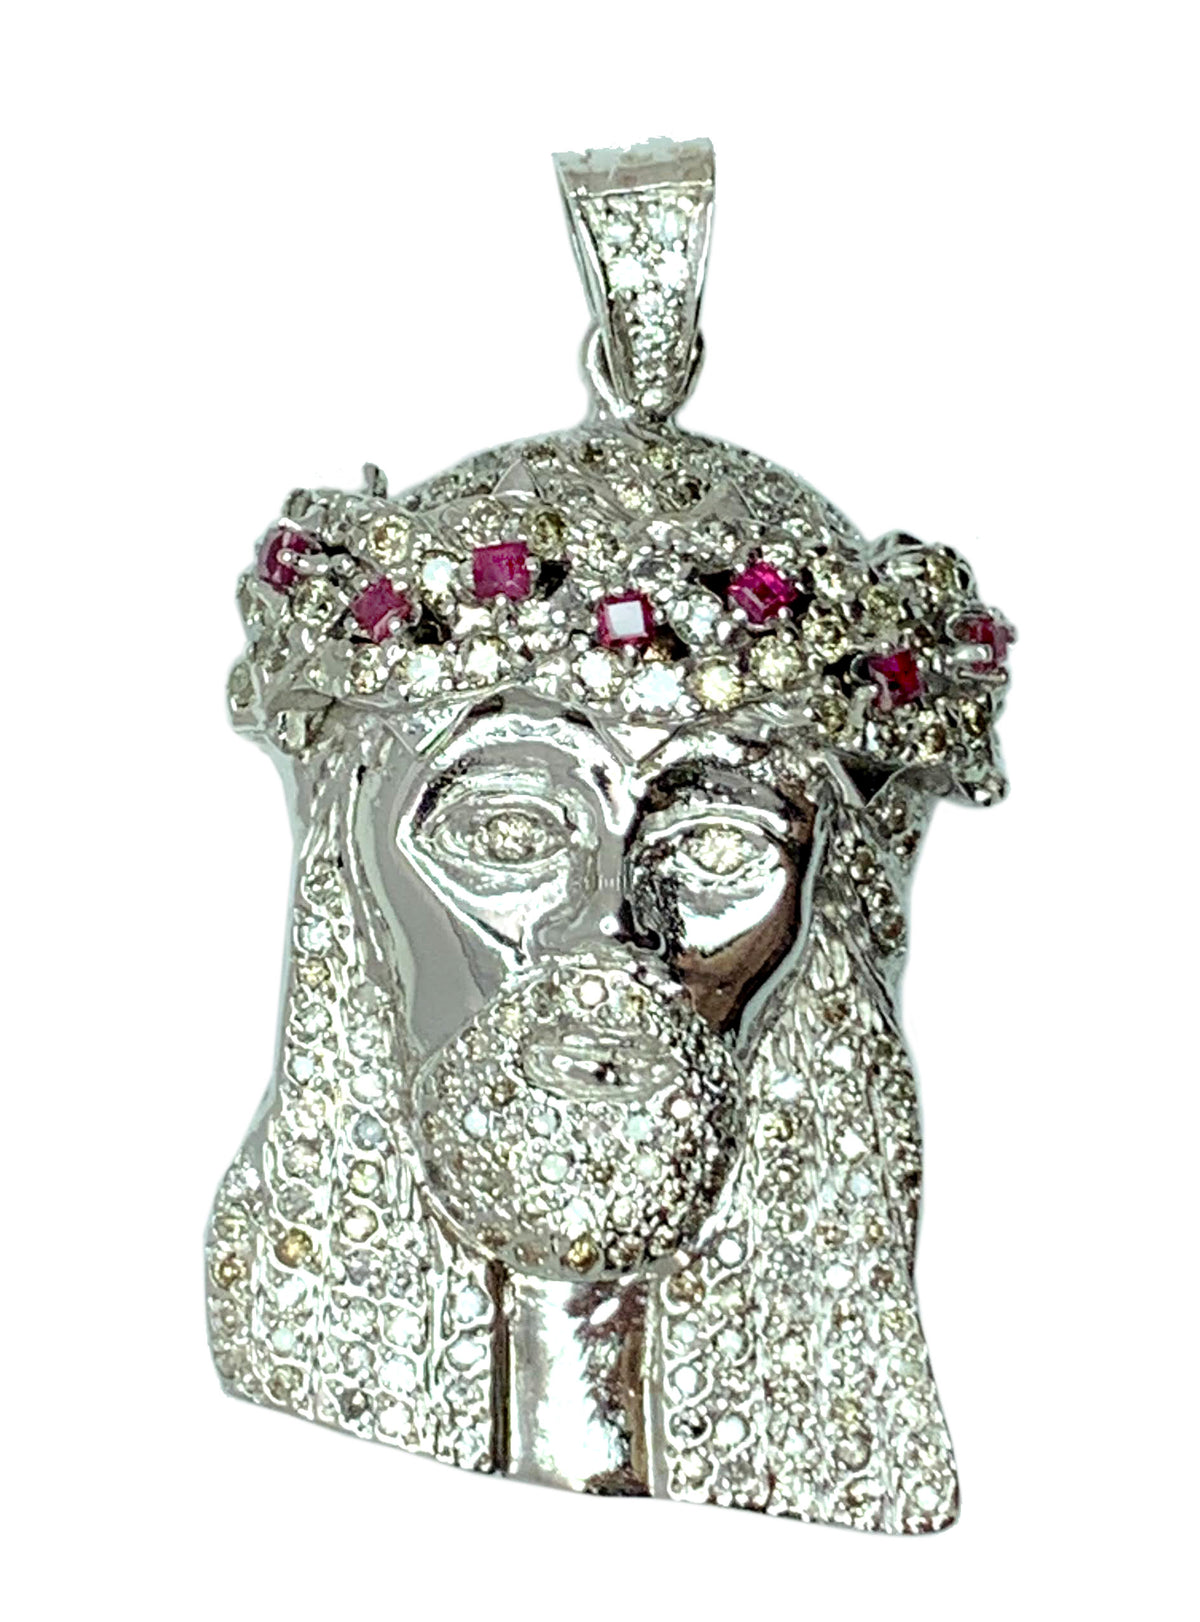 14 KT - White Gold Mens Diamond Jesus Head Pendant with Ruby - 3.8 CT